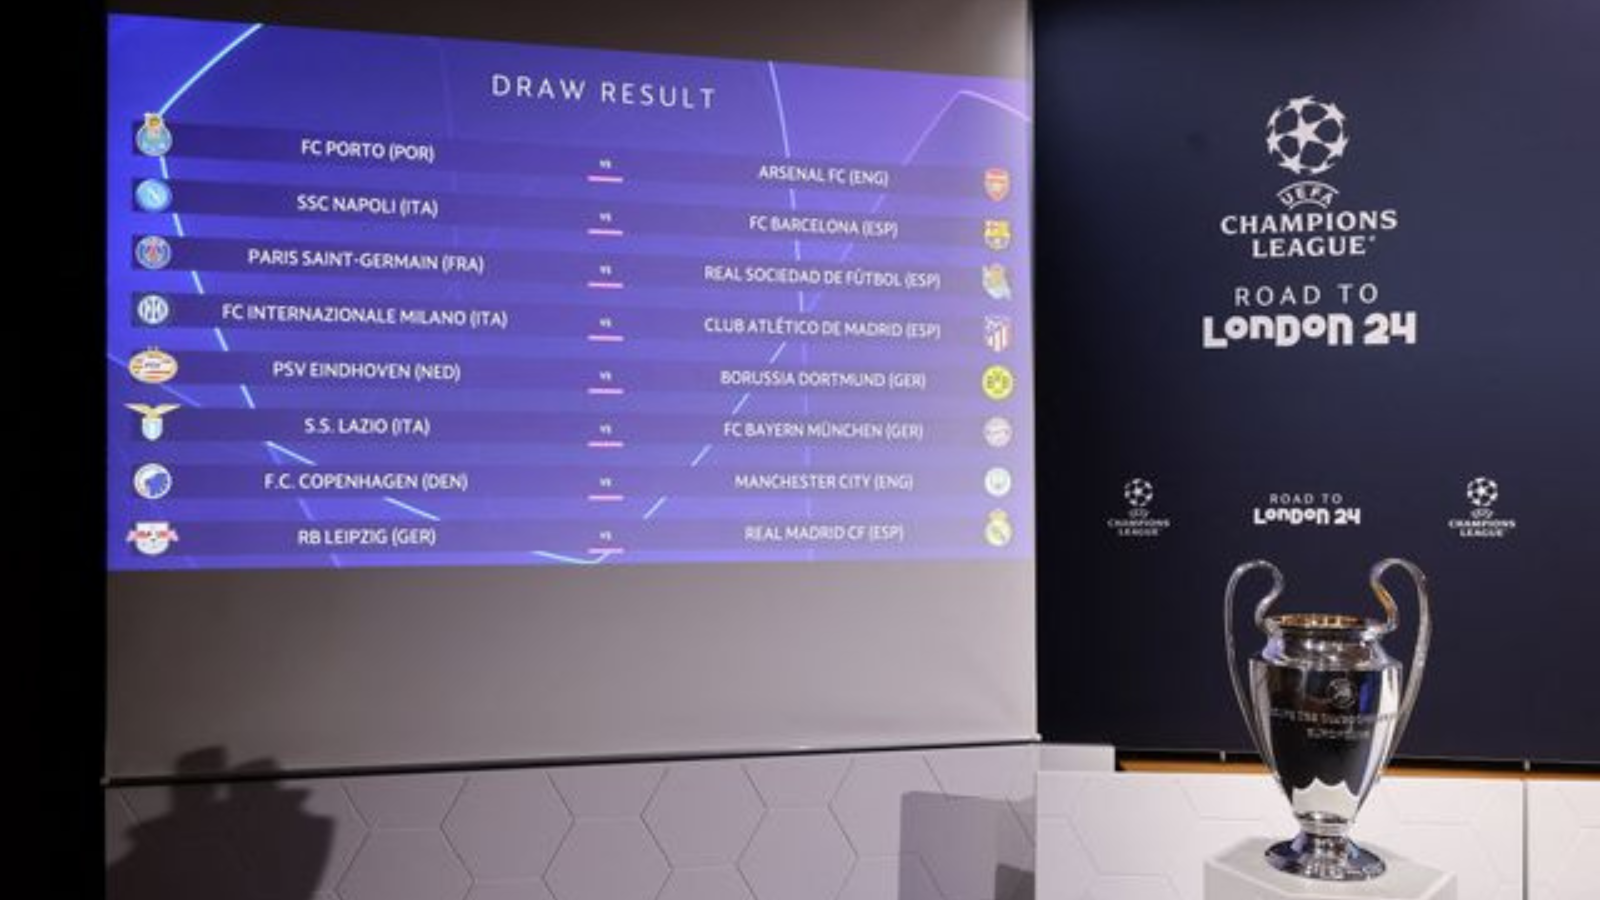 Matchday Live: Champions League Round of 16 draw-saigonsouth.com.vn